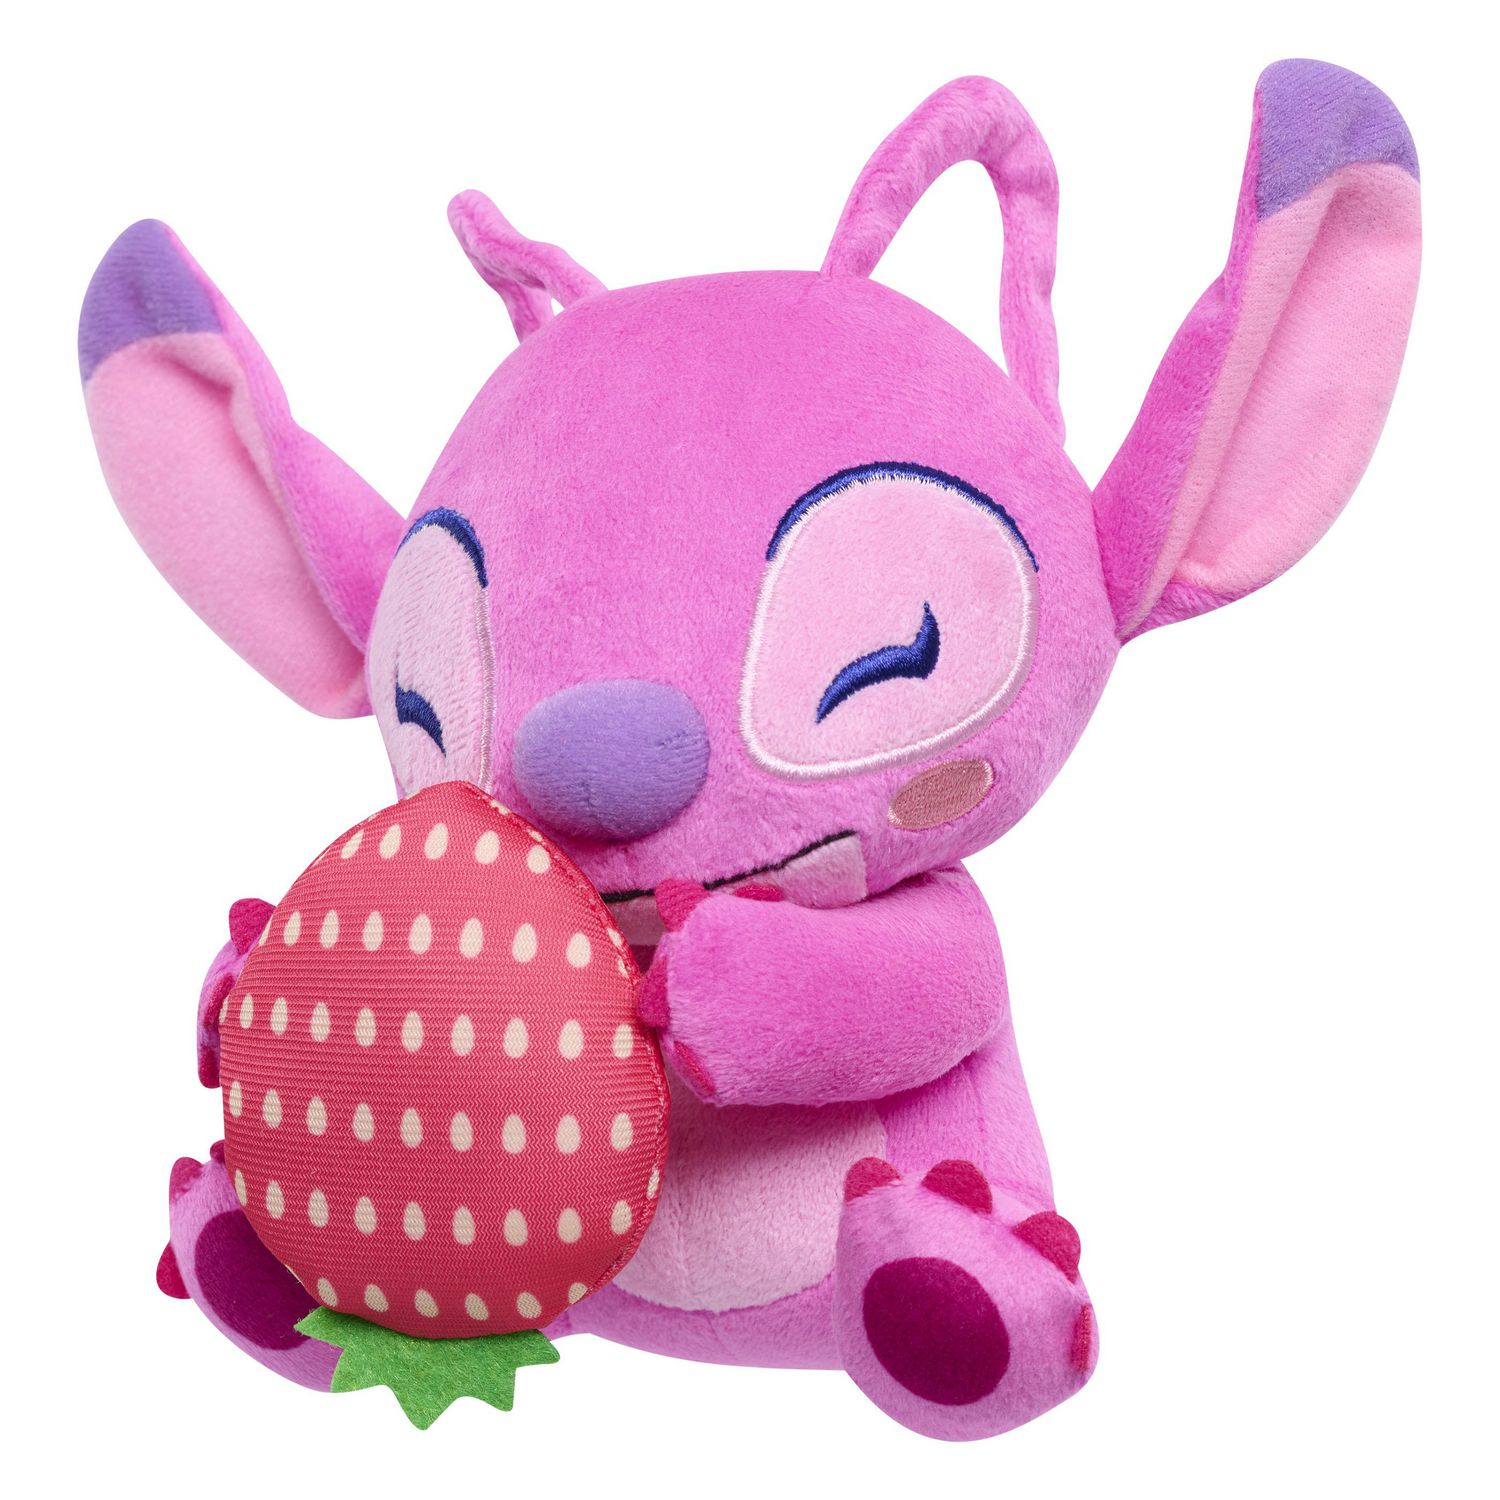 Disney Stitch Small 7-inch Plush Stuffed Animal, Angel with Strawberry 